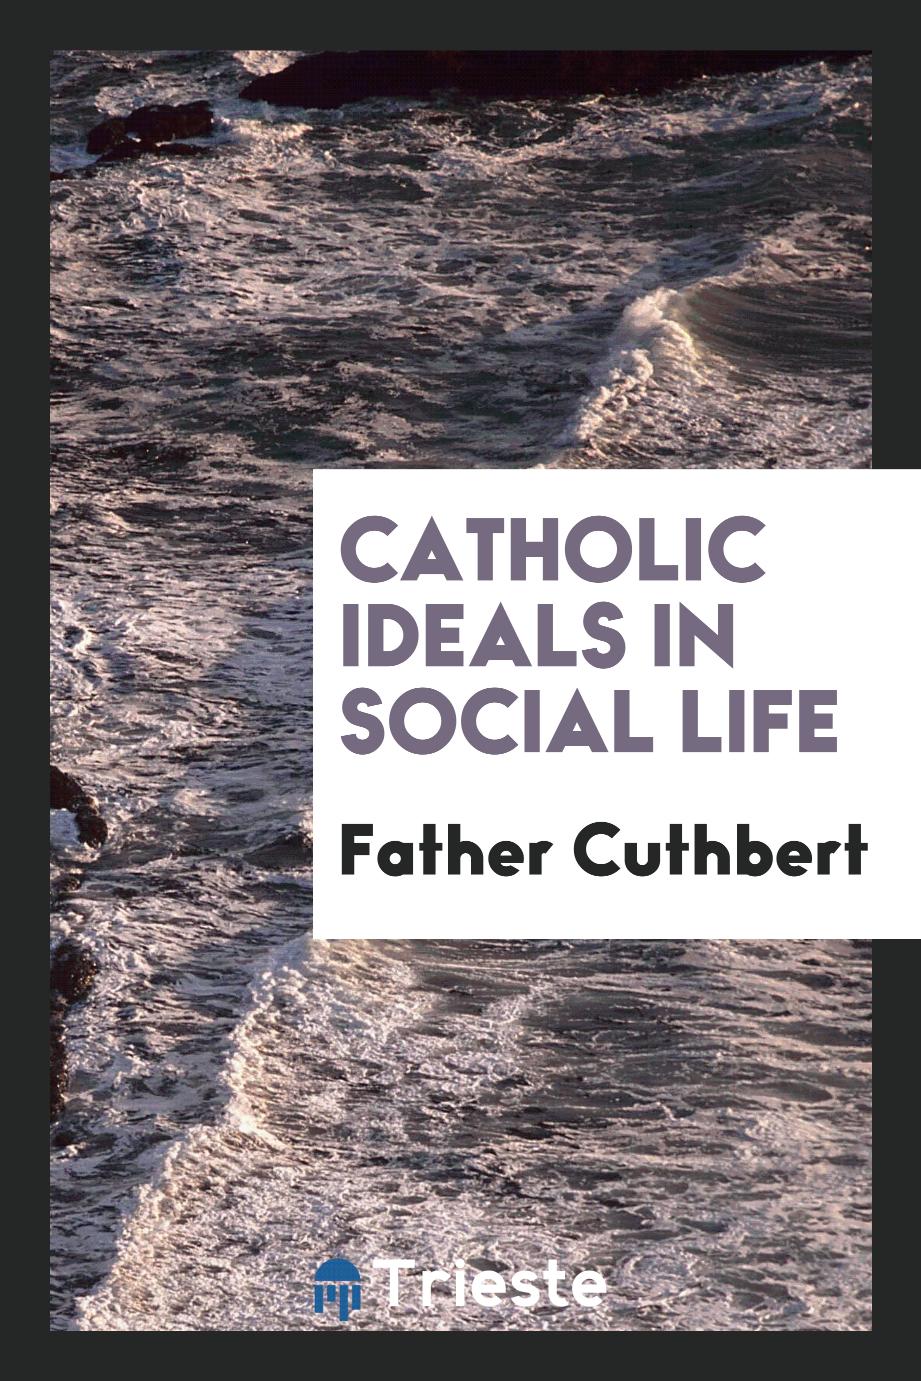 Catholic ideals in social life